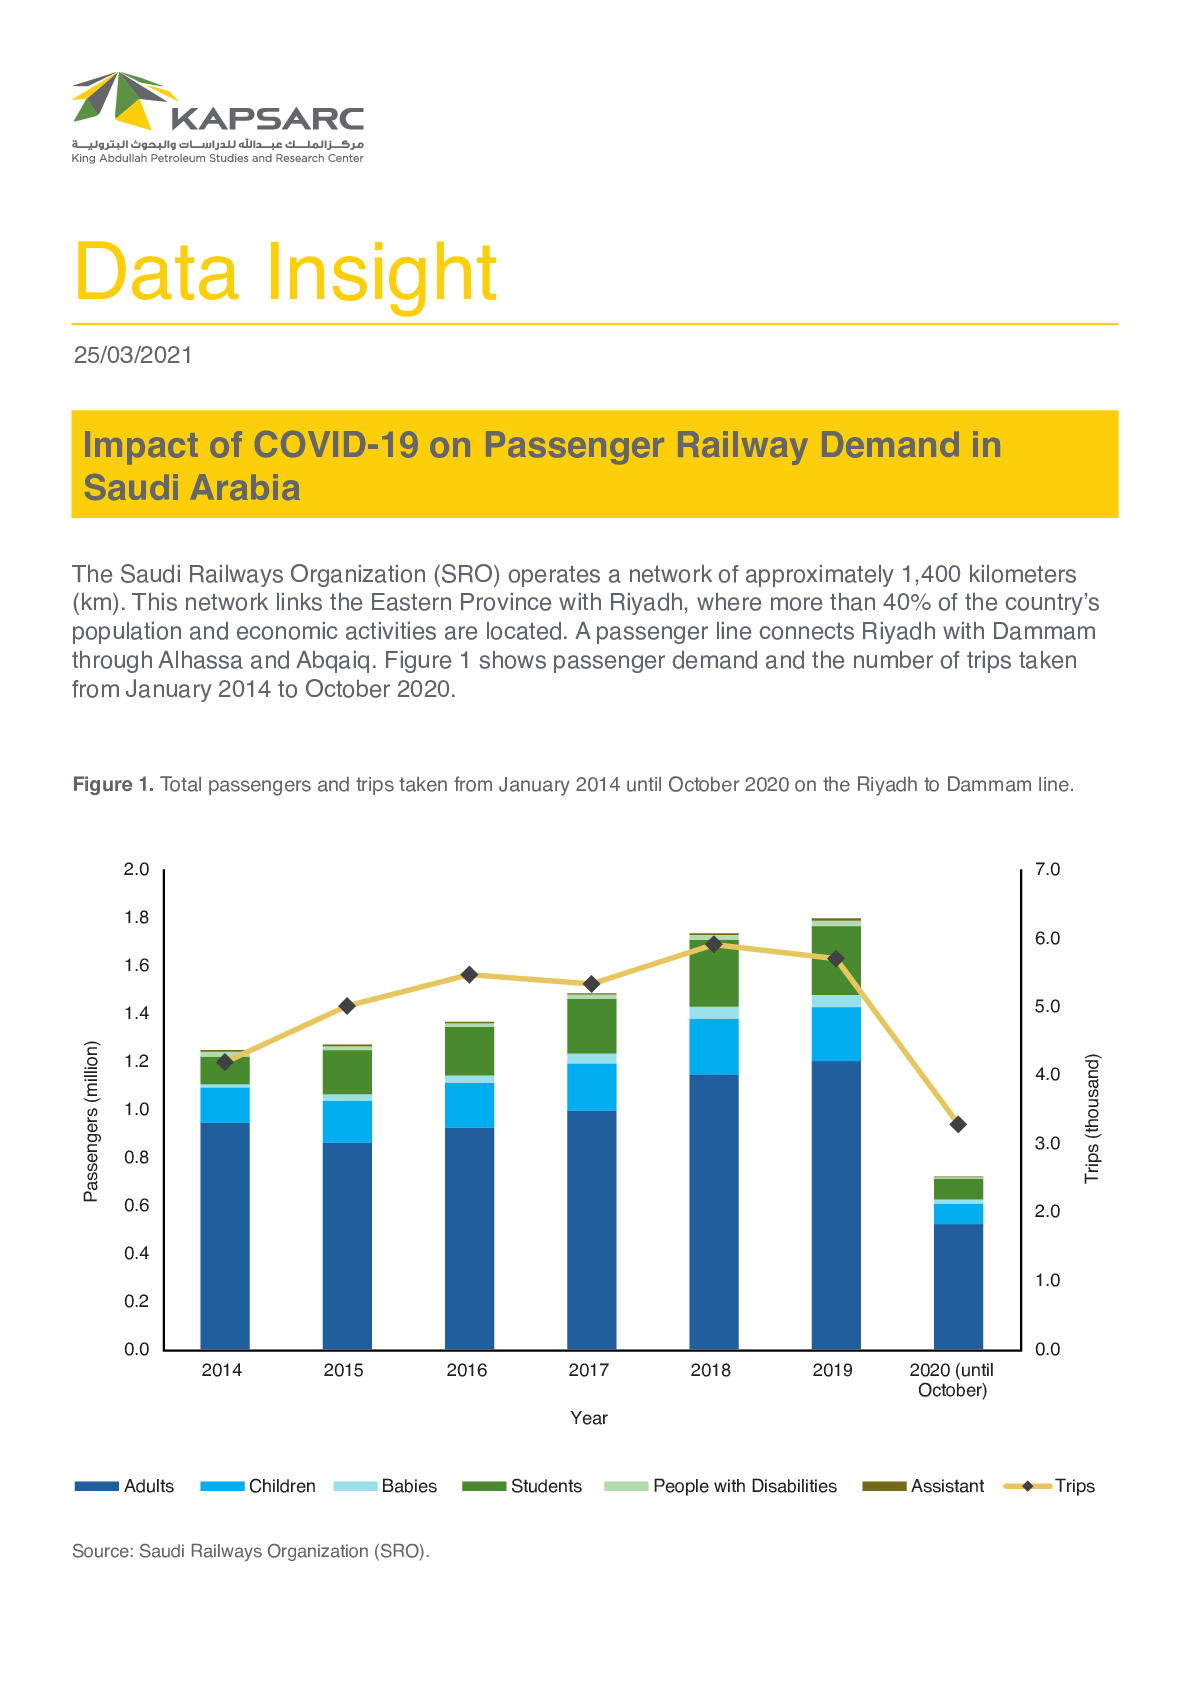 Impact of COVID-19 on Passenger Railway Demand in Saudi Arabia